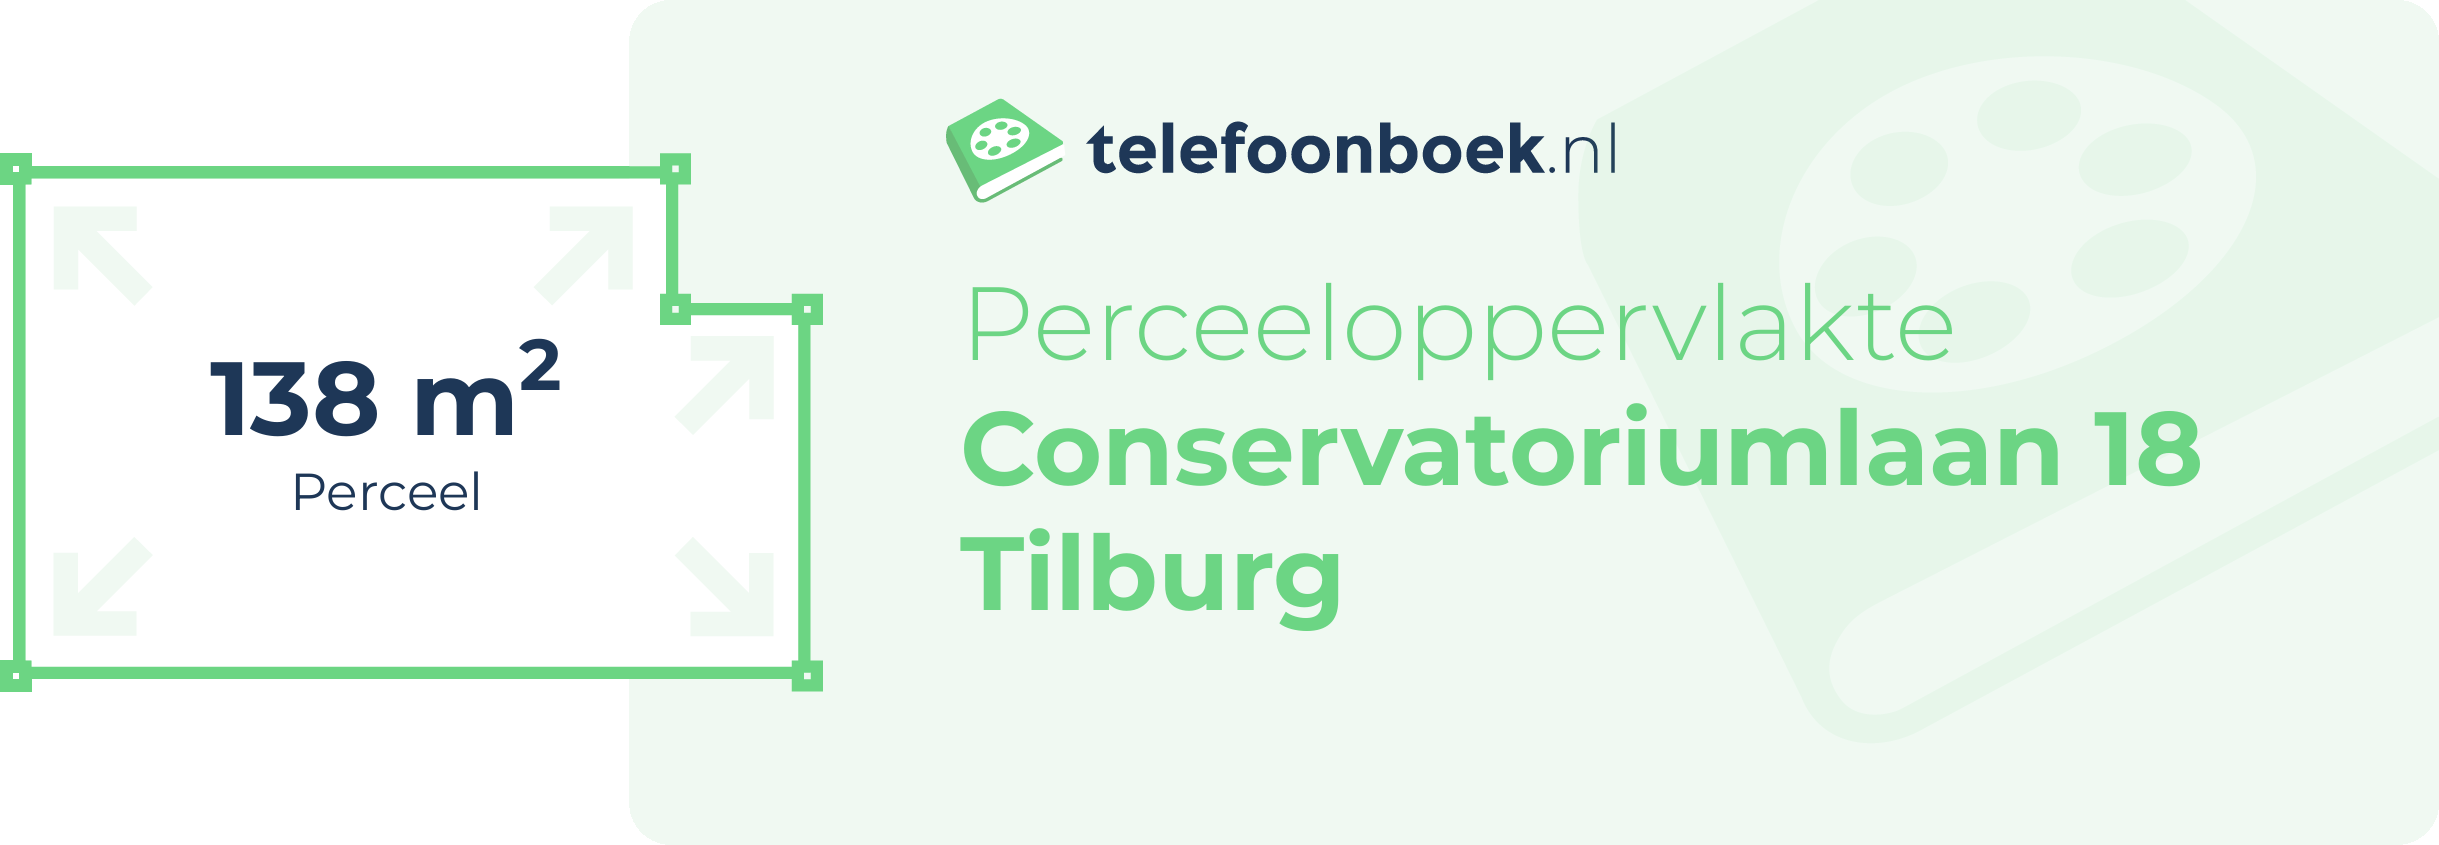 Perceeloppervlakte Conservatoriumlaan 18 Tilburg